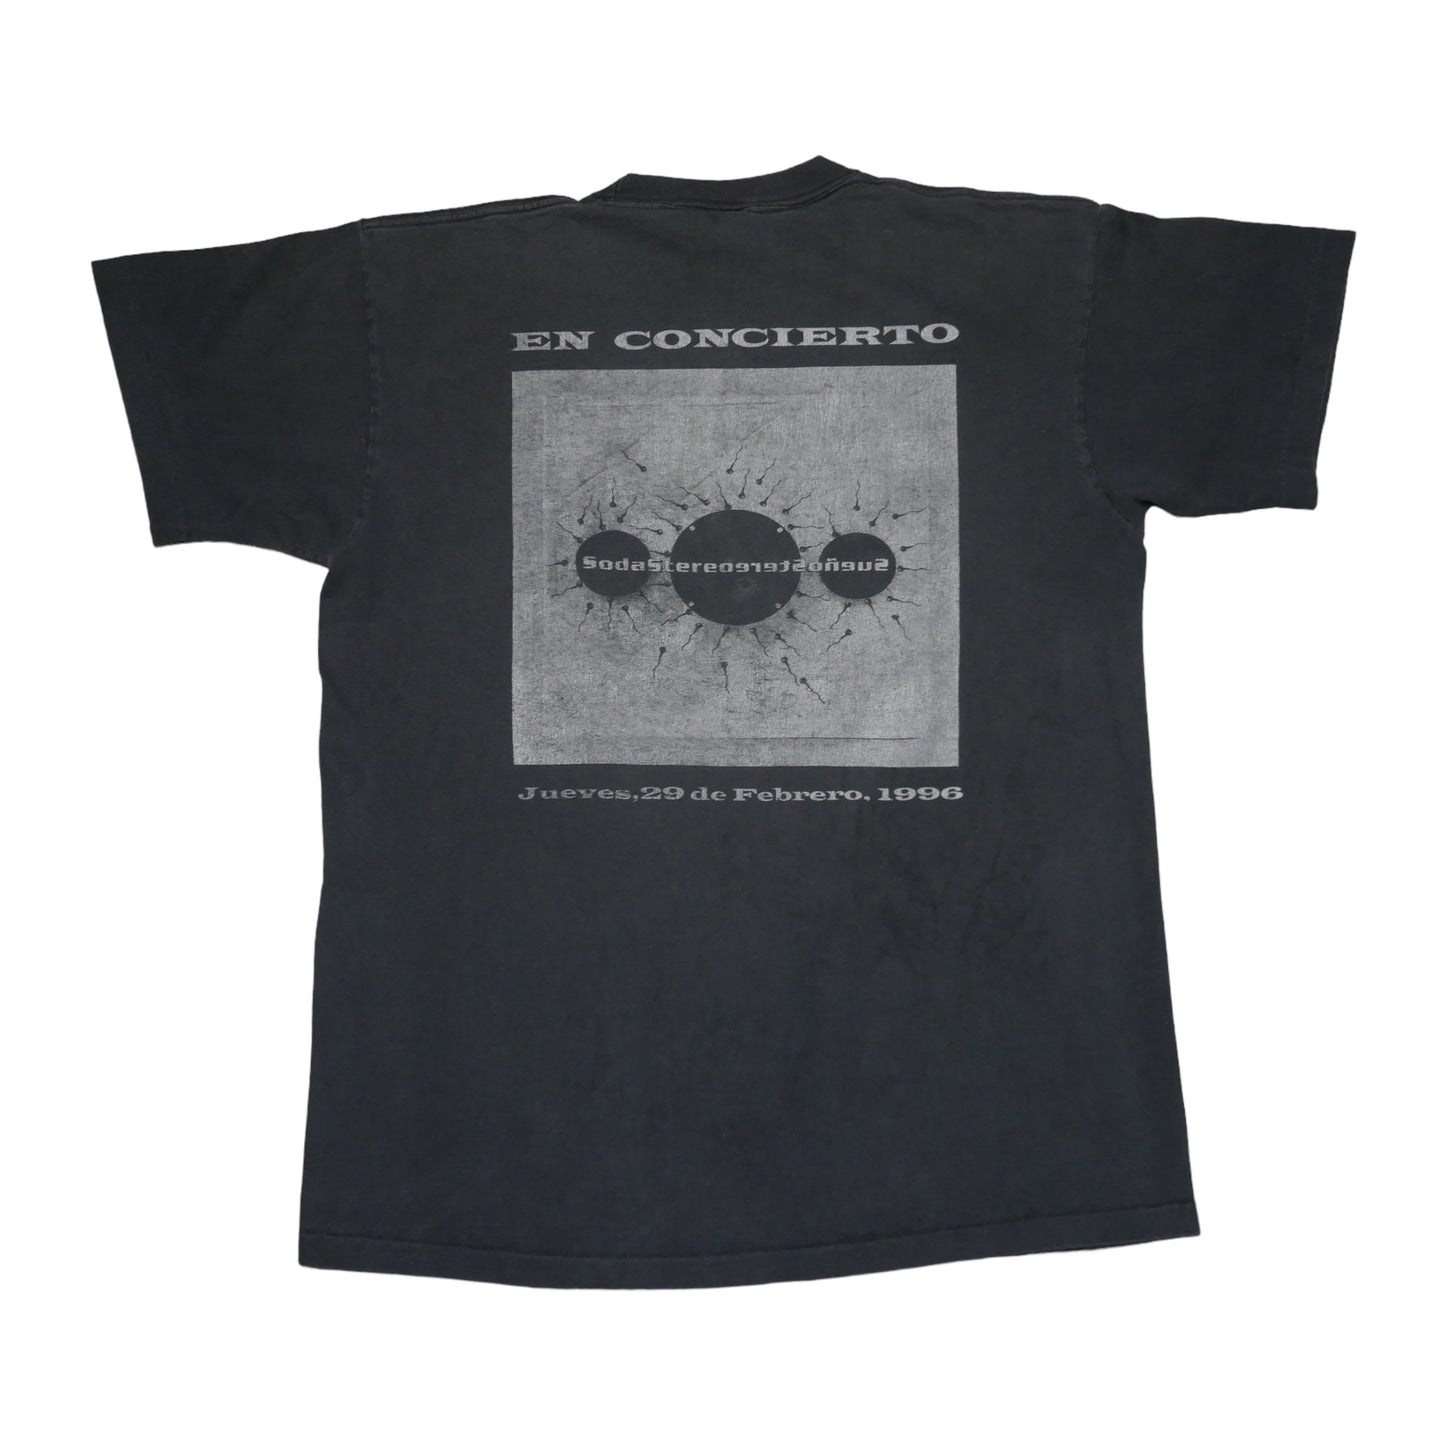 Soda Stereo 1996 Tour Shirt - 1996